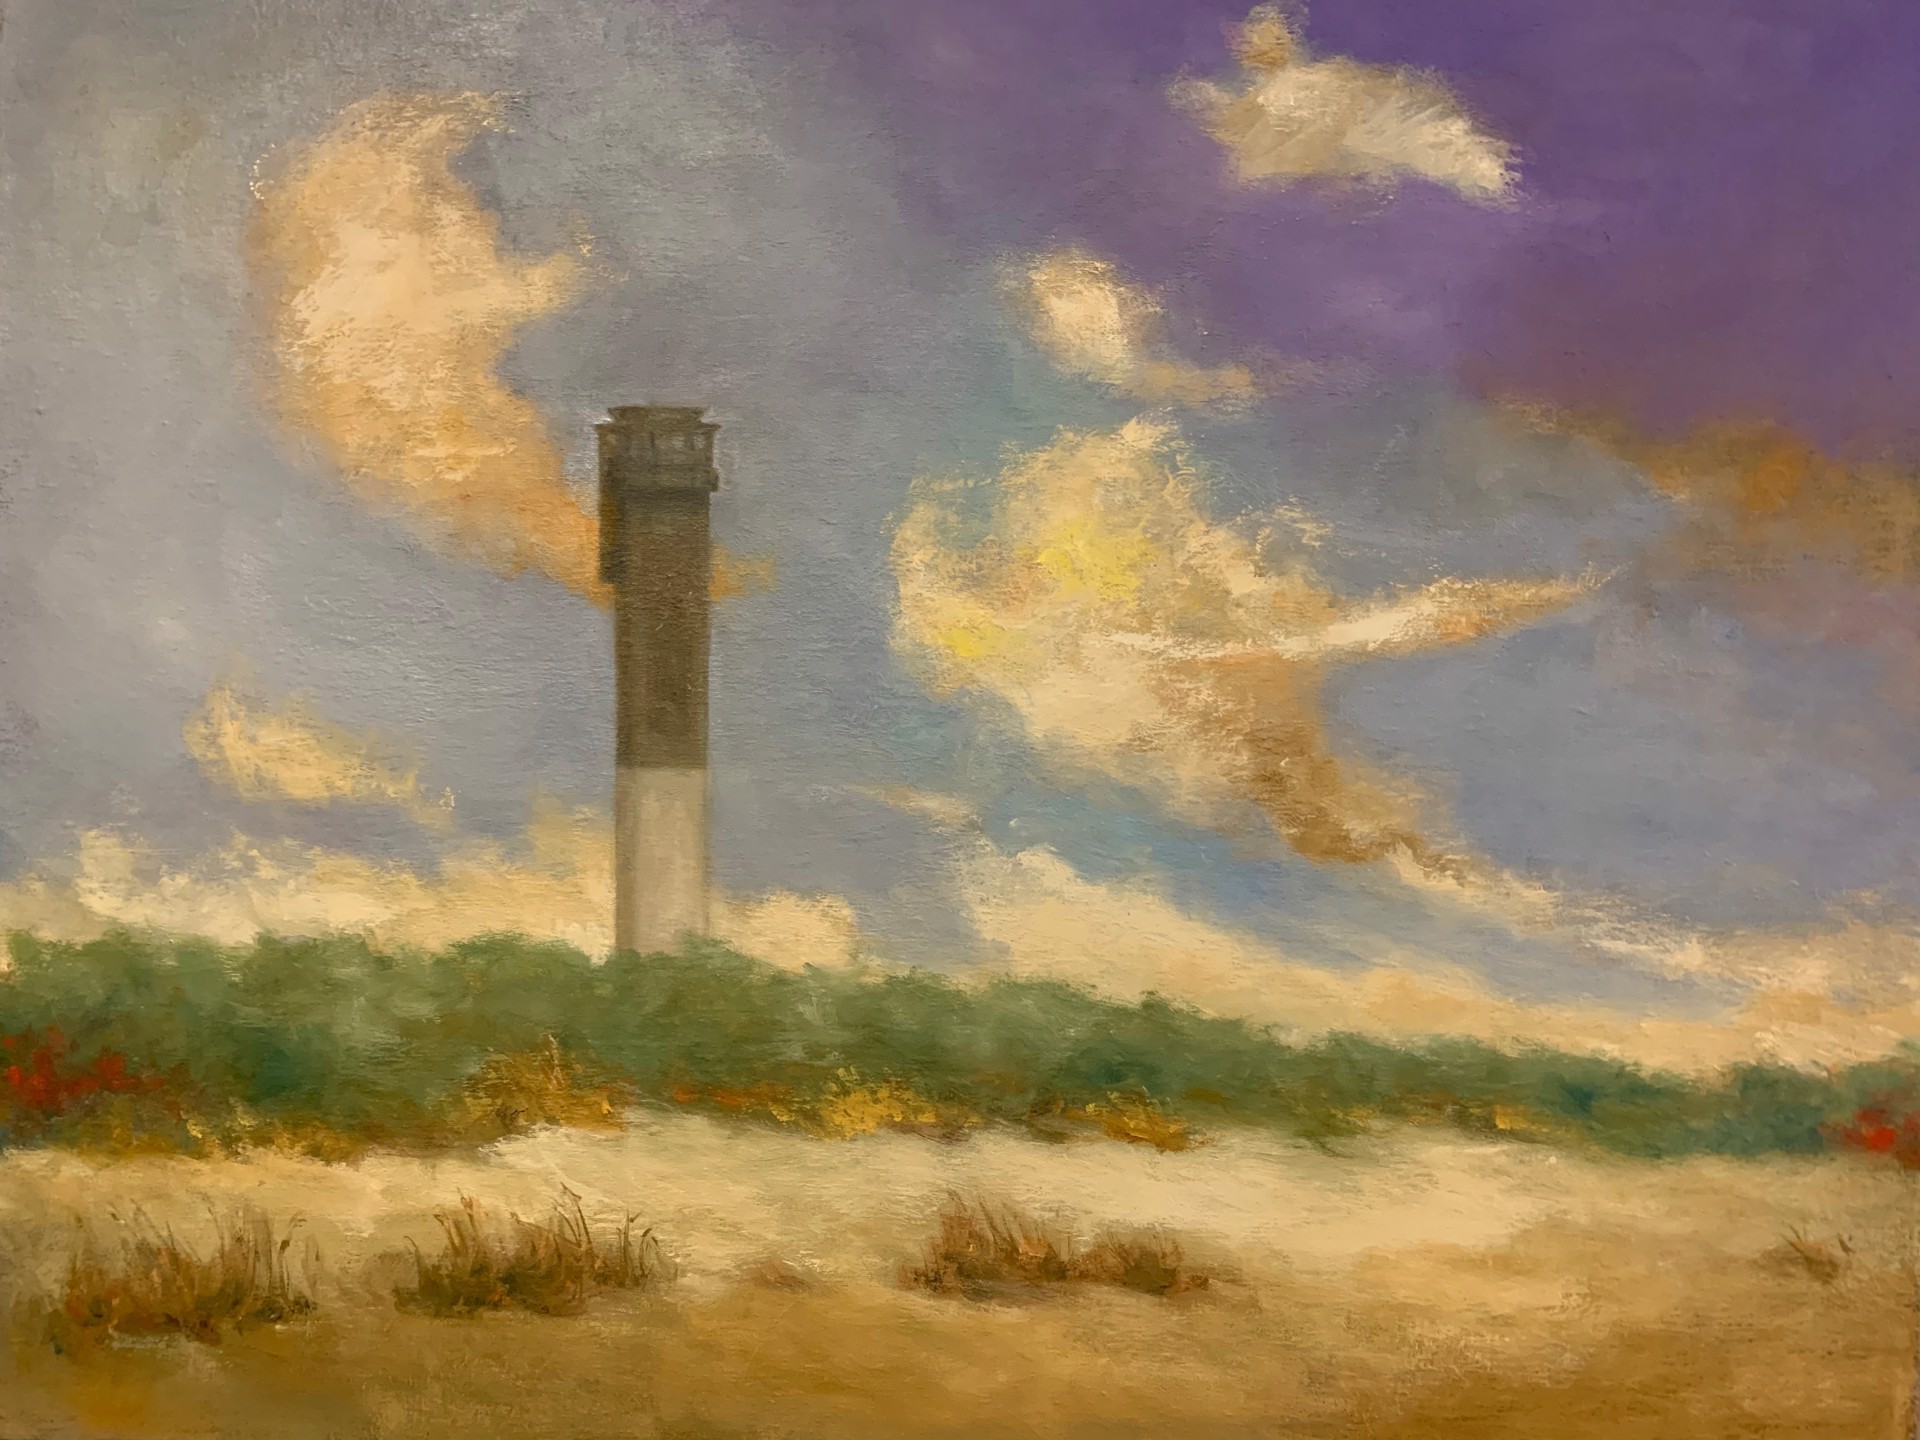 Sullivan's Lighthouse by Jim Darlington